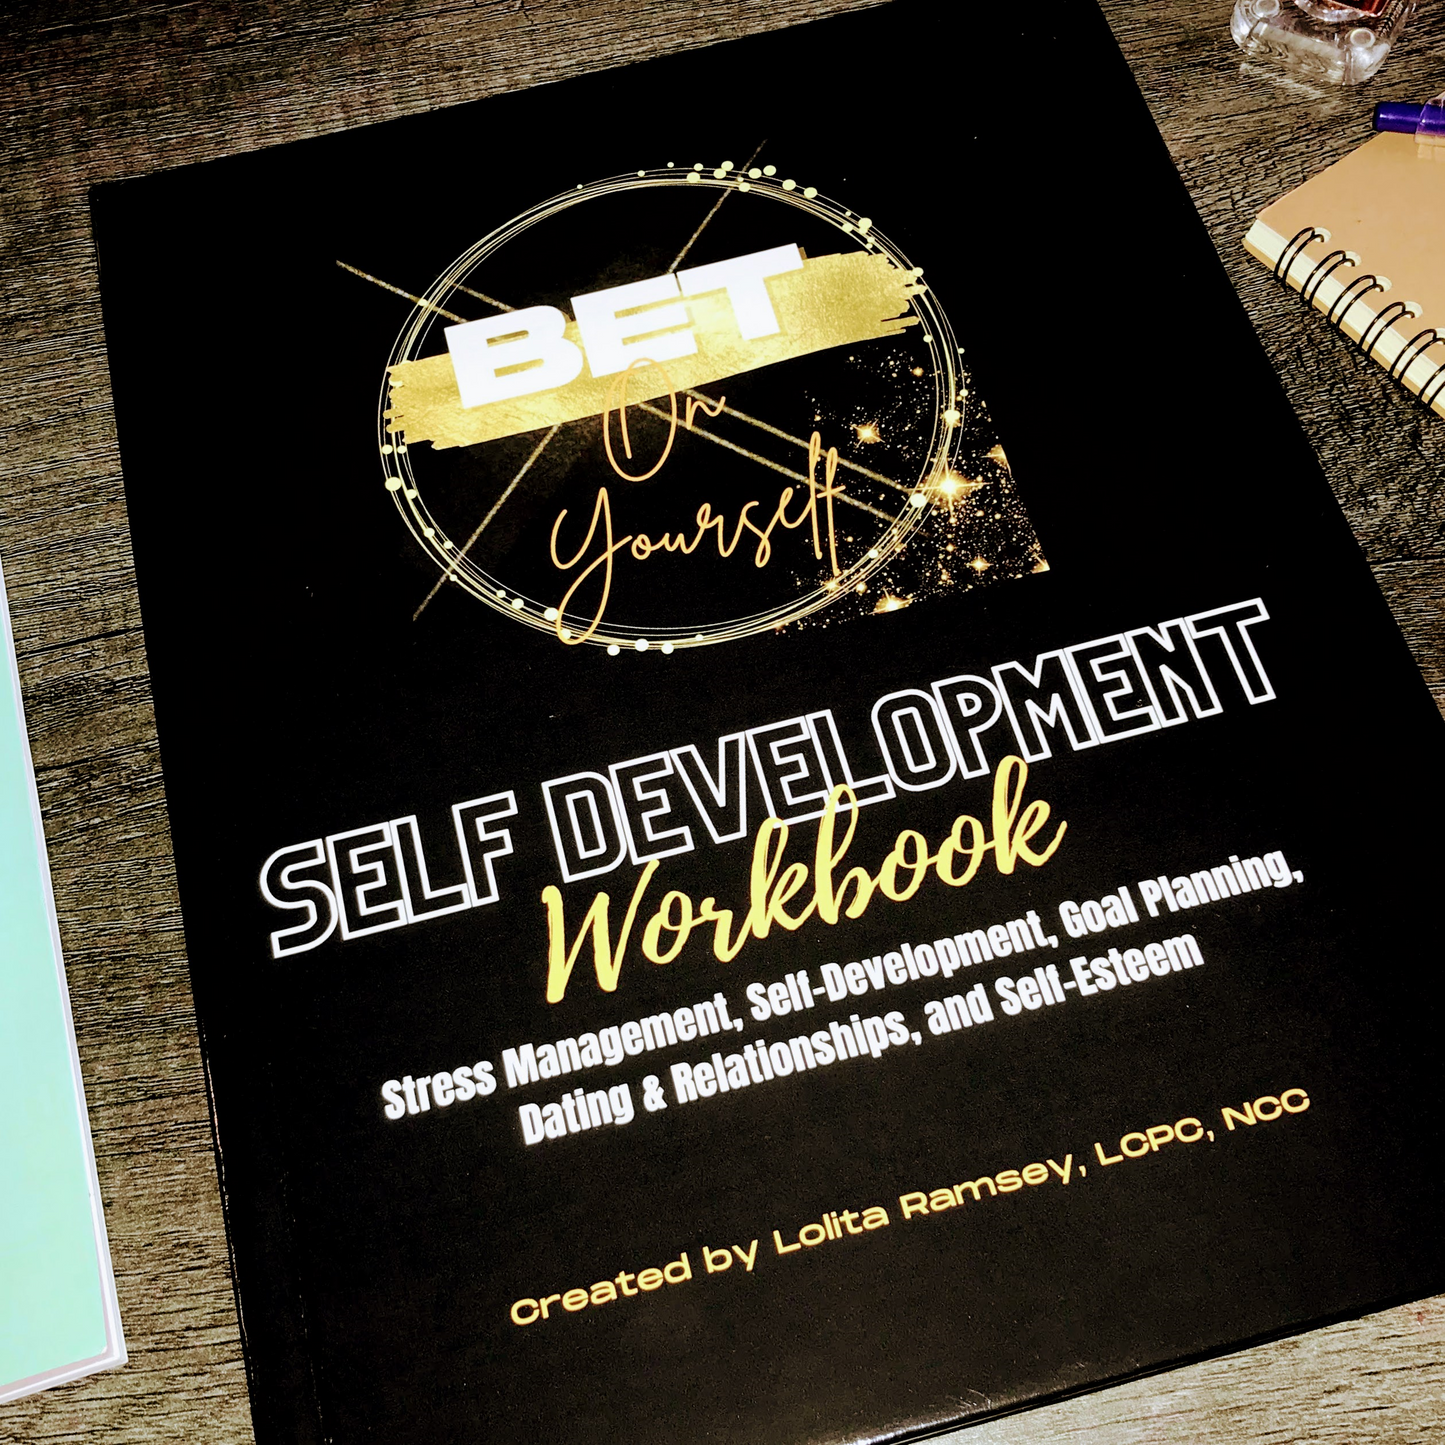 BET On Yourself: Self-Development Workbook